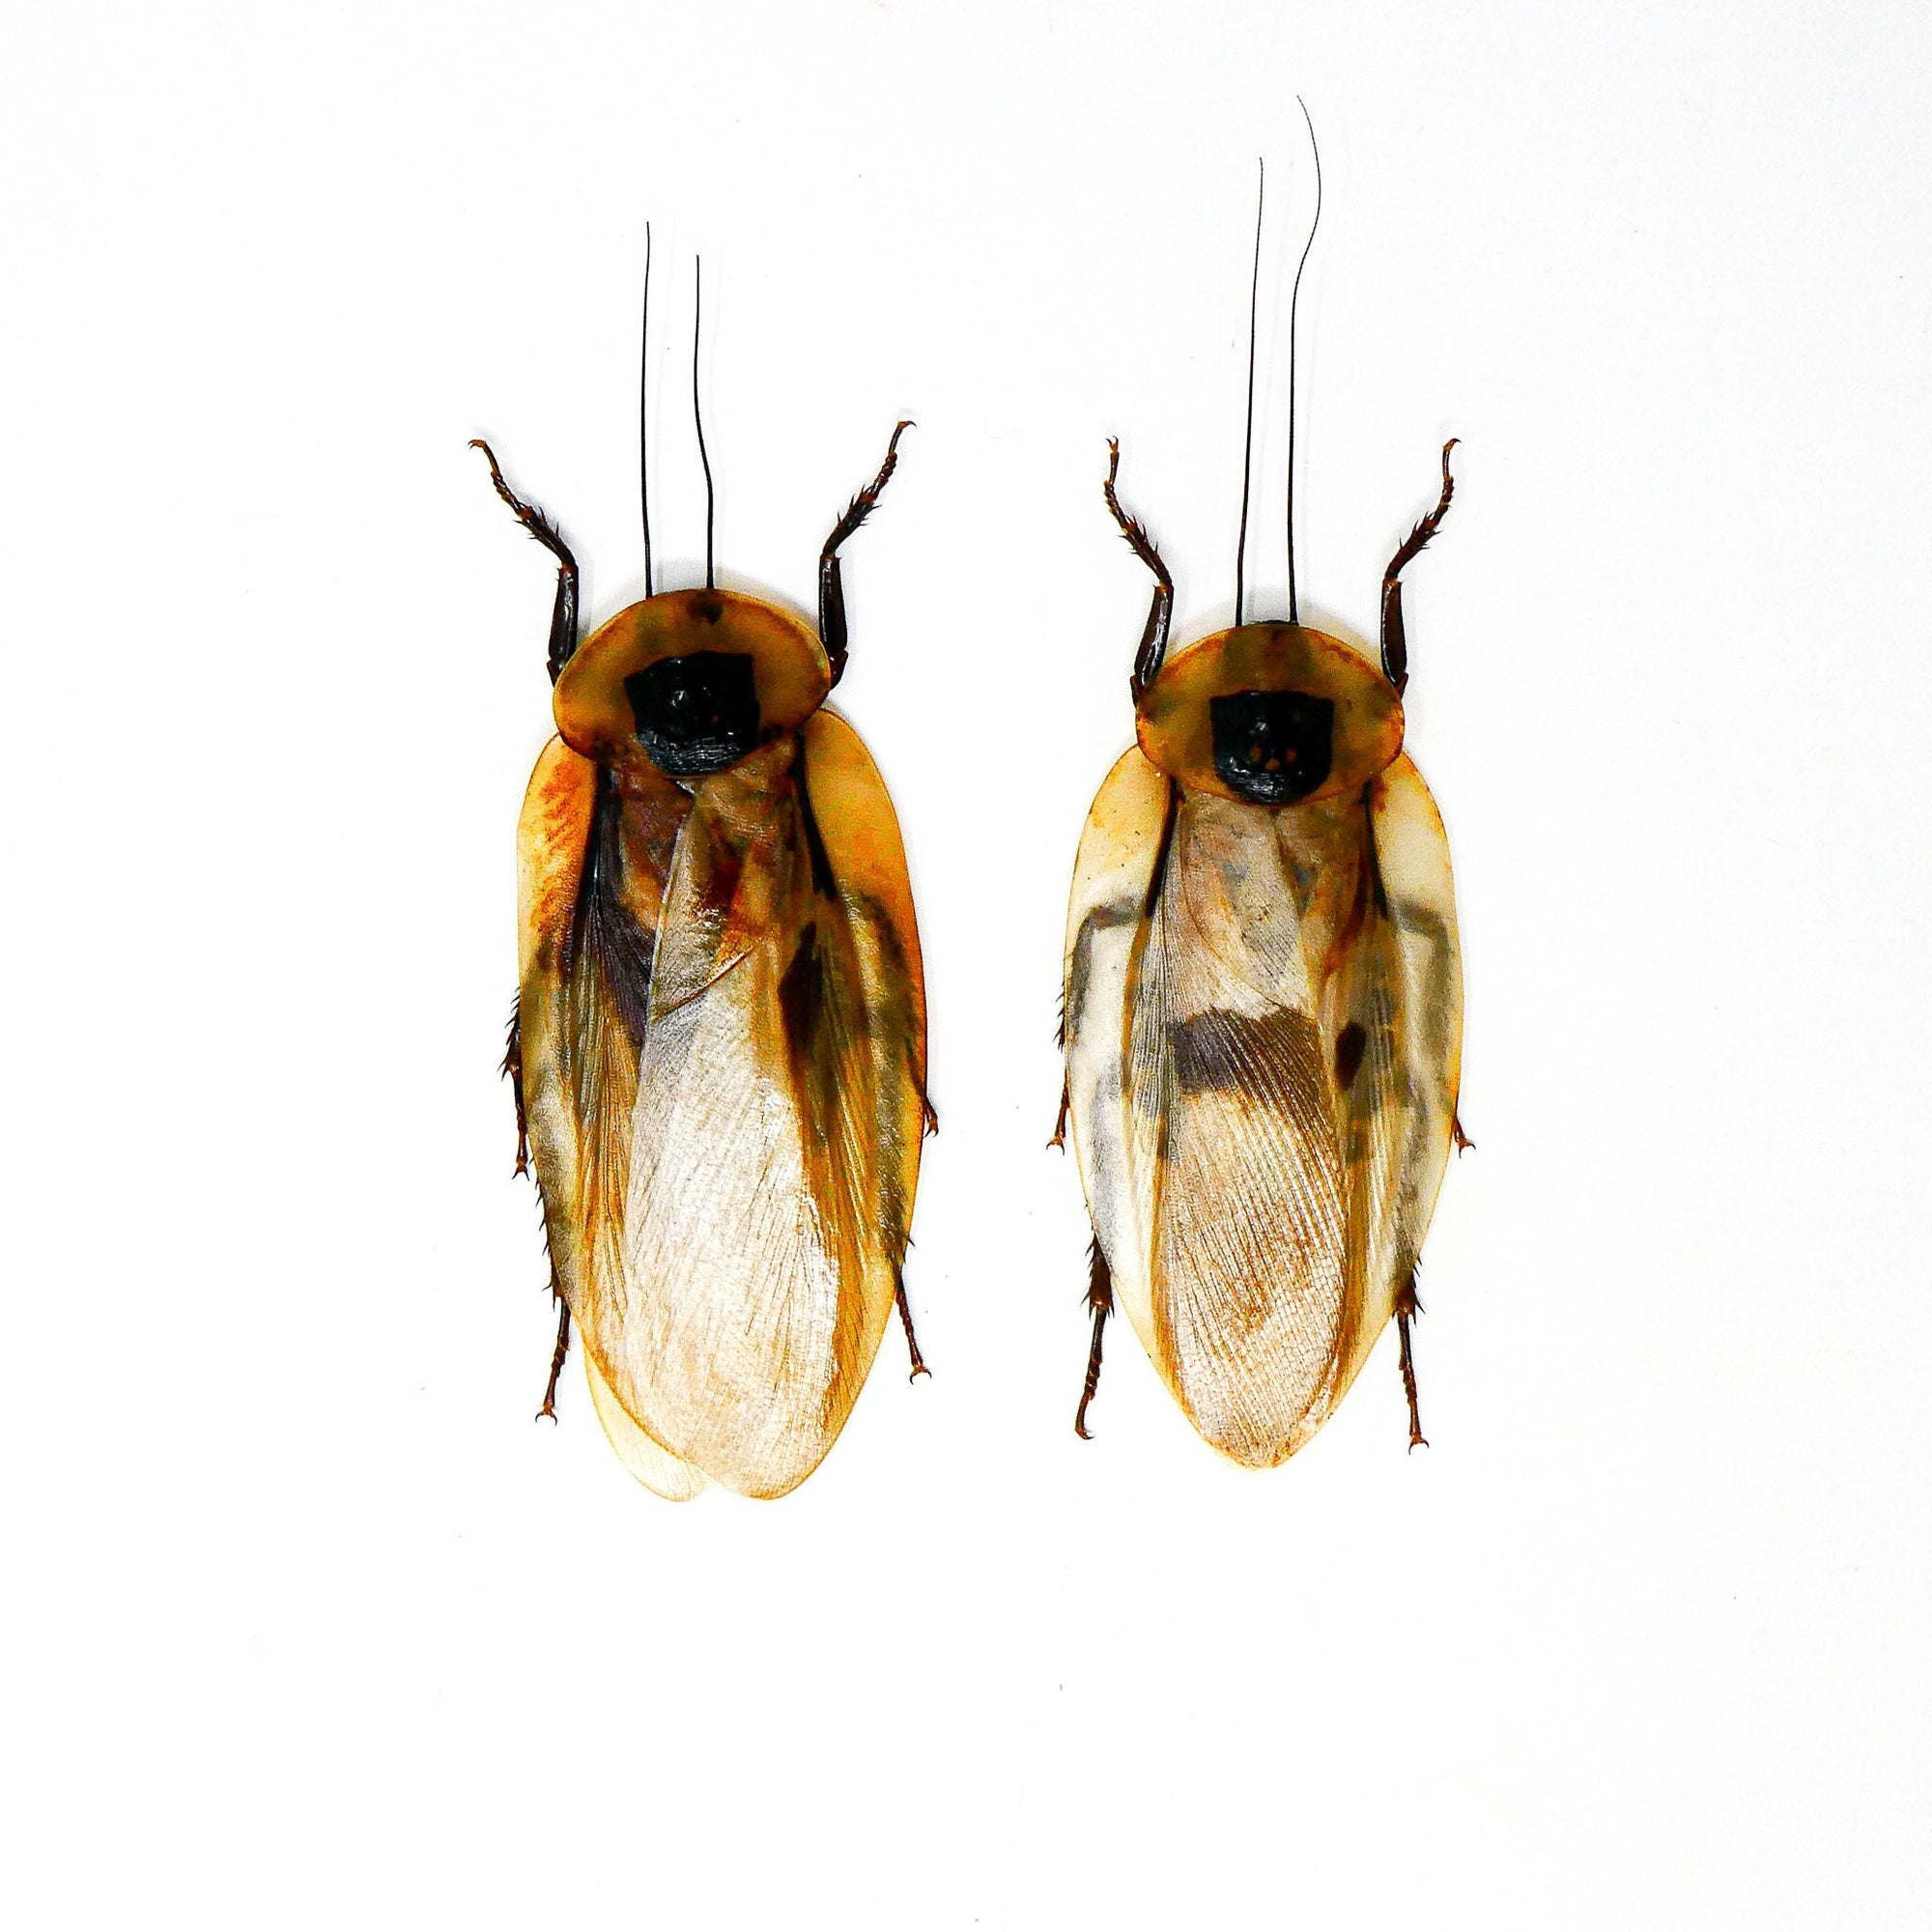 TWO (2) Giant Cave Cockroaches (Blaberus giganteus) A1 Ethically Sourced Entomology Specimens